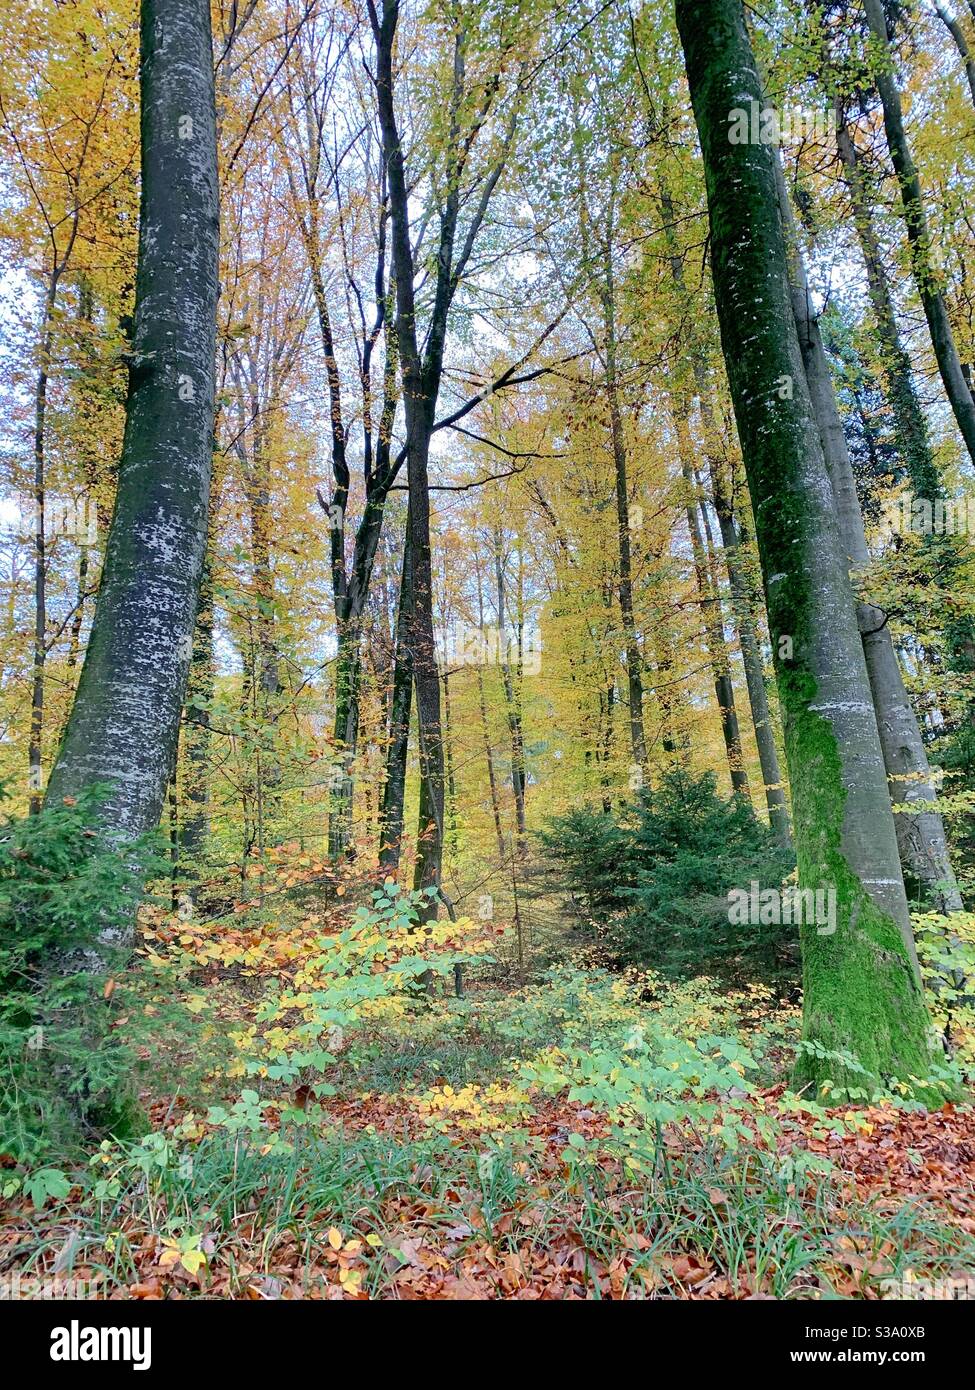 Hohe Bäume in der Herbstsaison Stockfoto